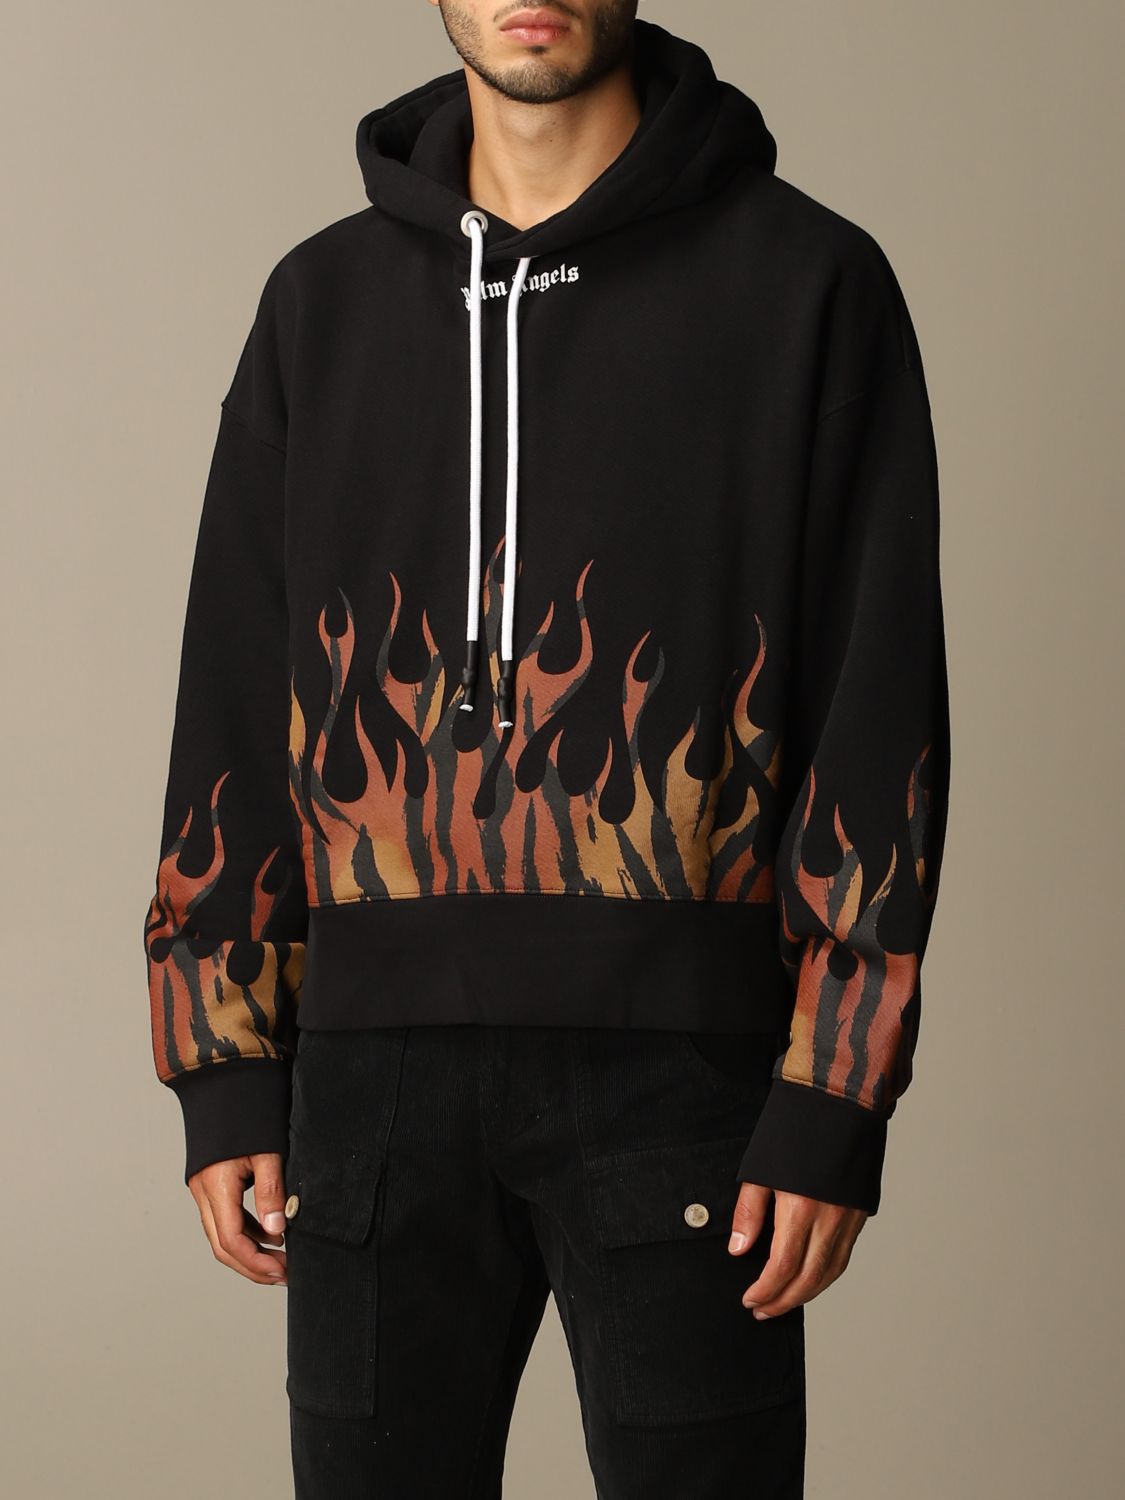 Palm Angels sweatshirt with flame print